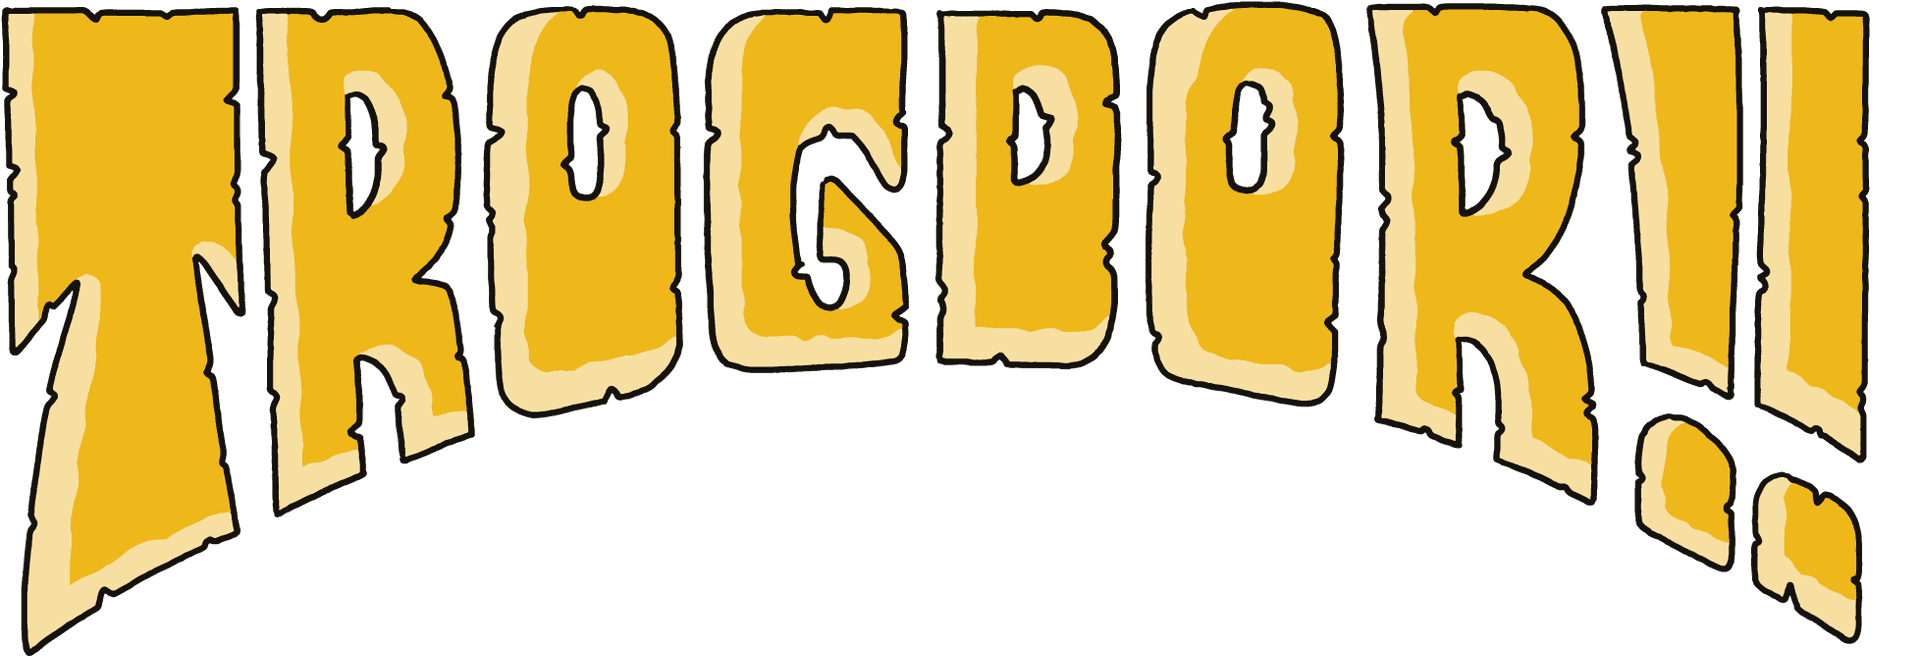 Trogdor Board Game Logo PNG image